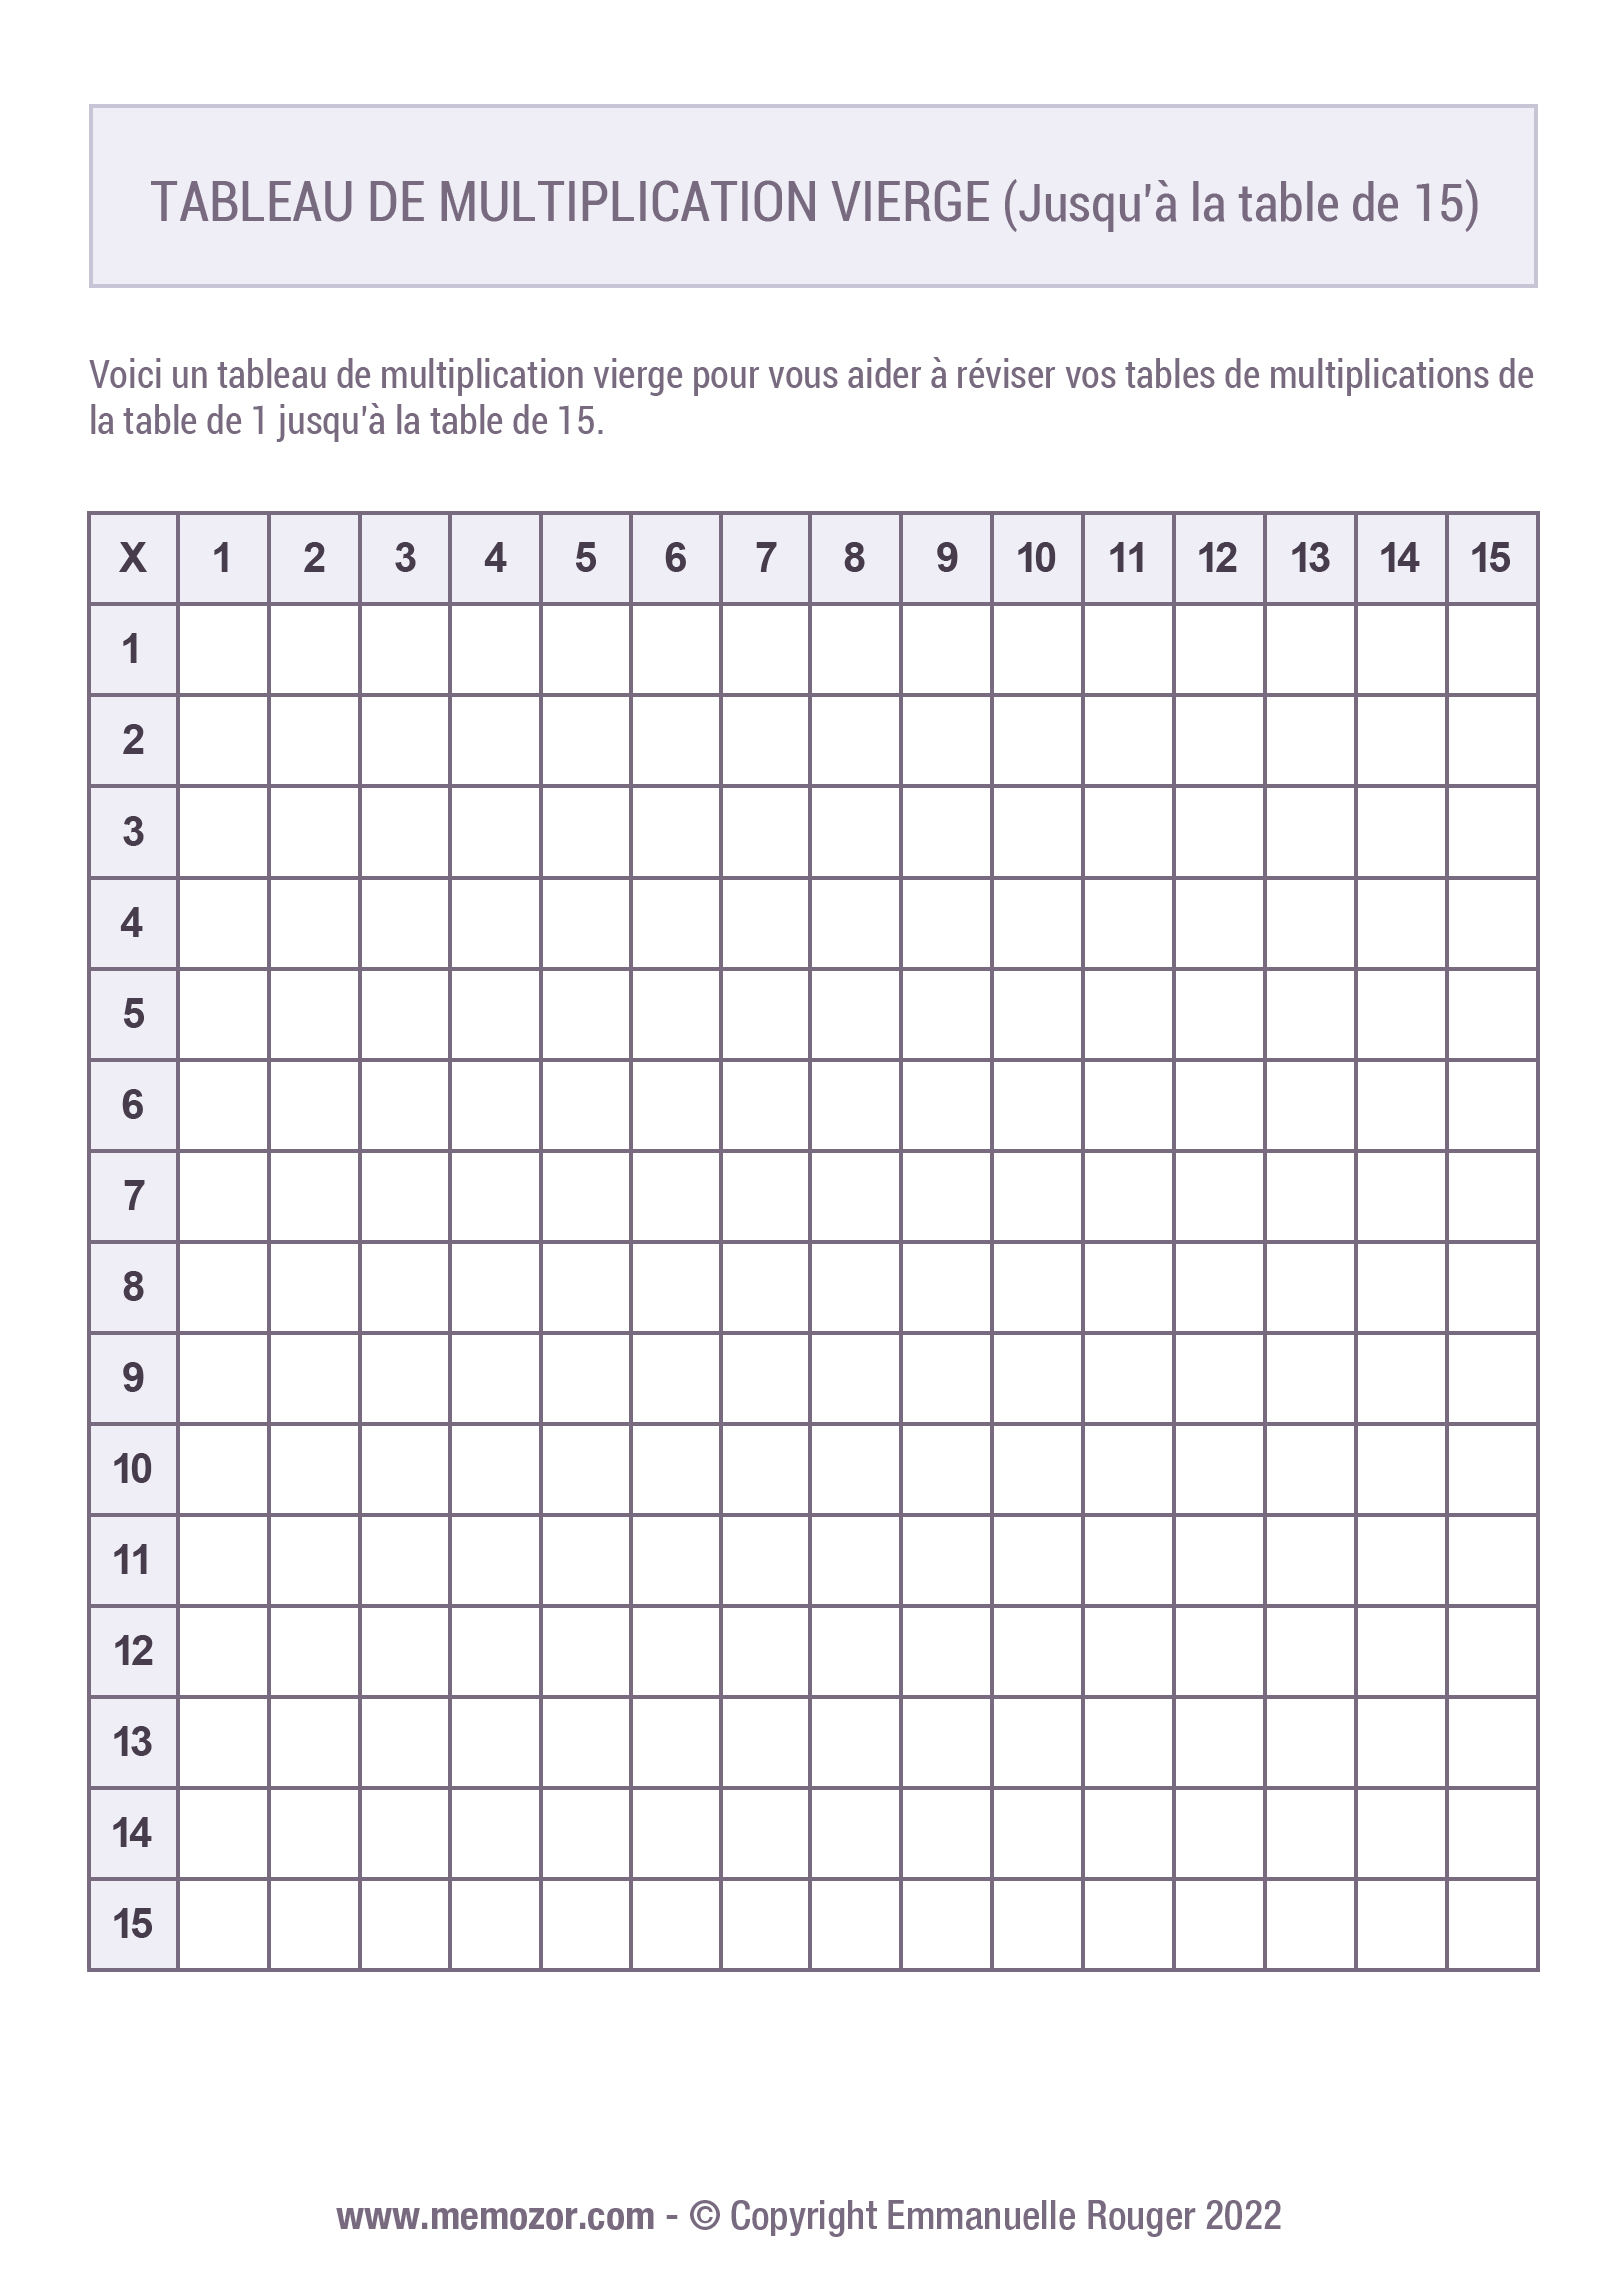 tableau-de-multiplication-vierge-1-15-imprimer-gratuit-memozor